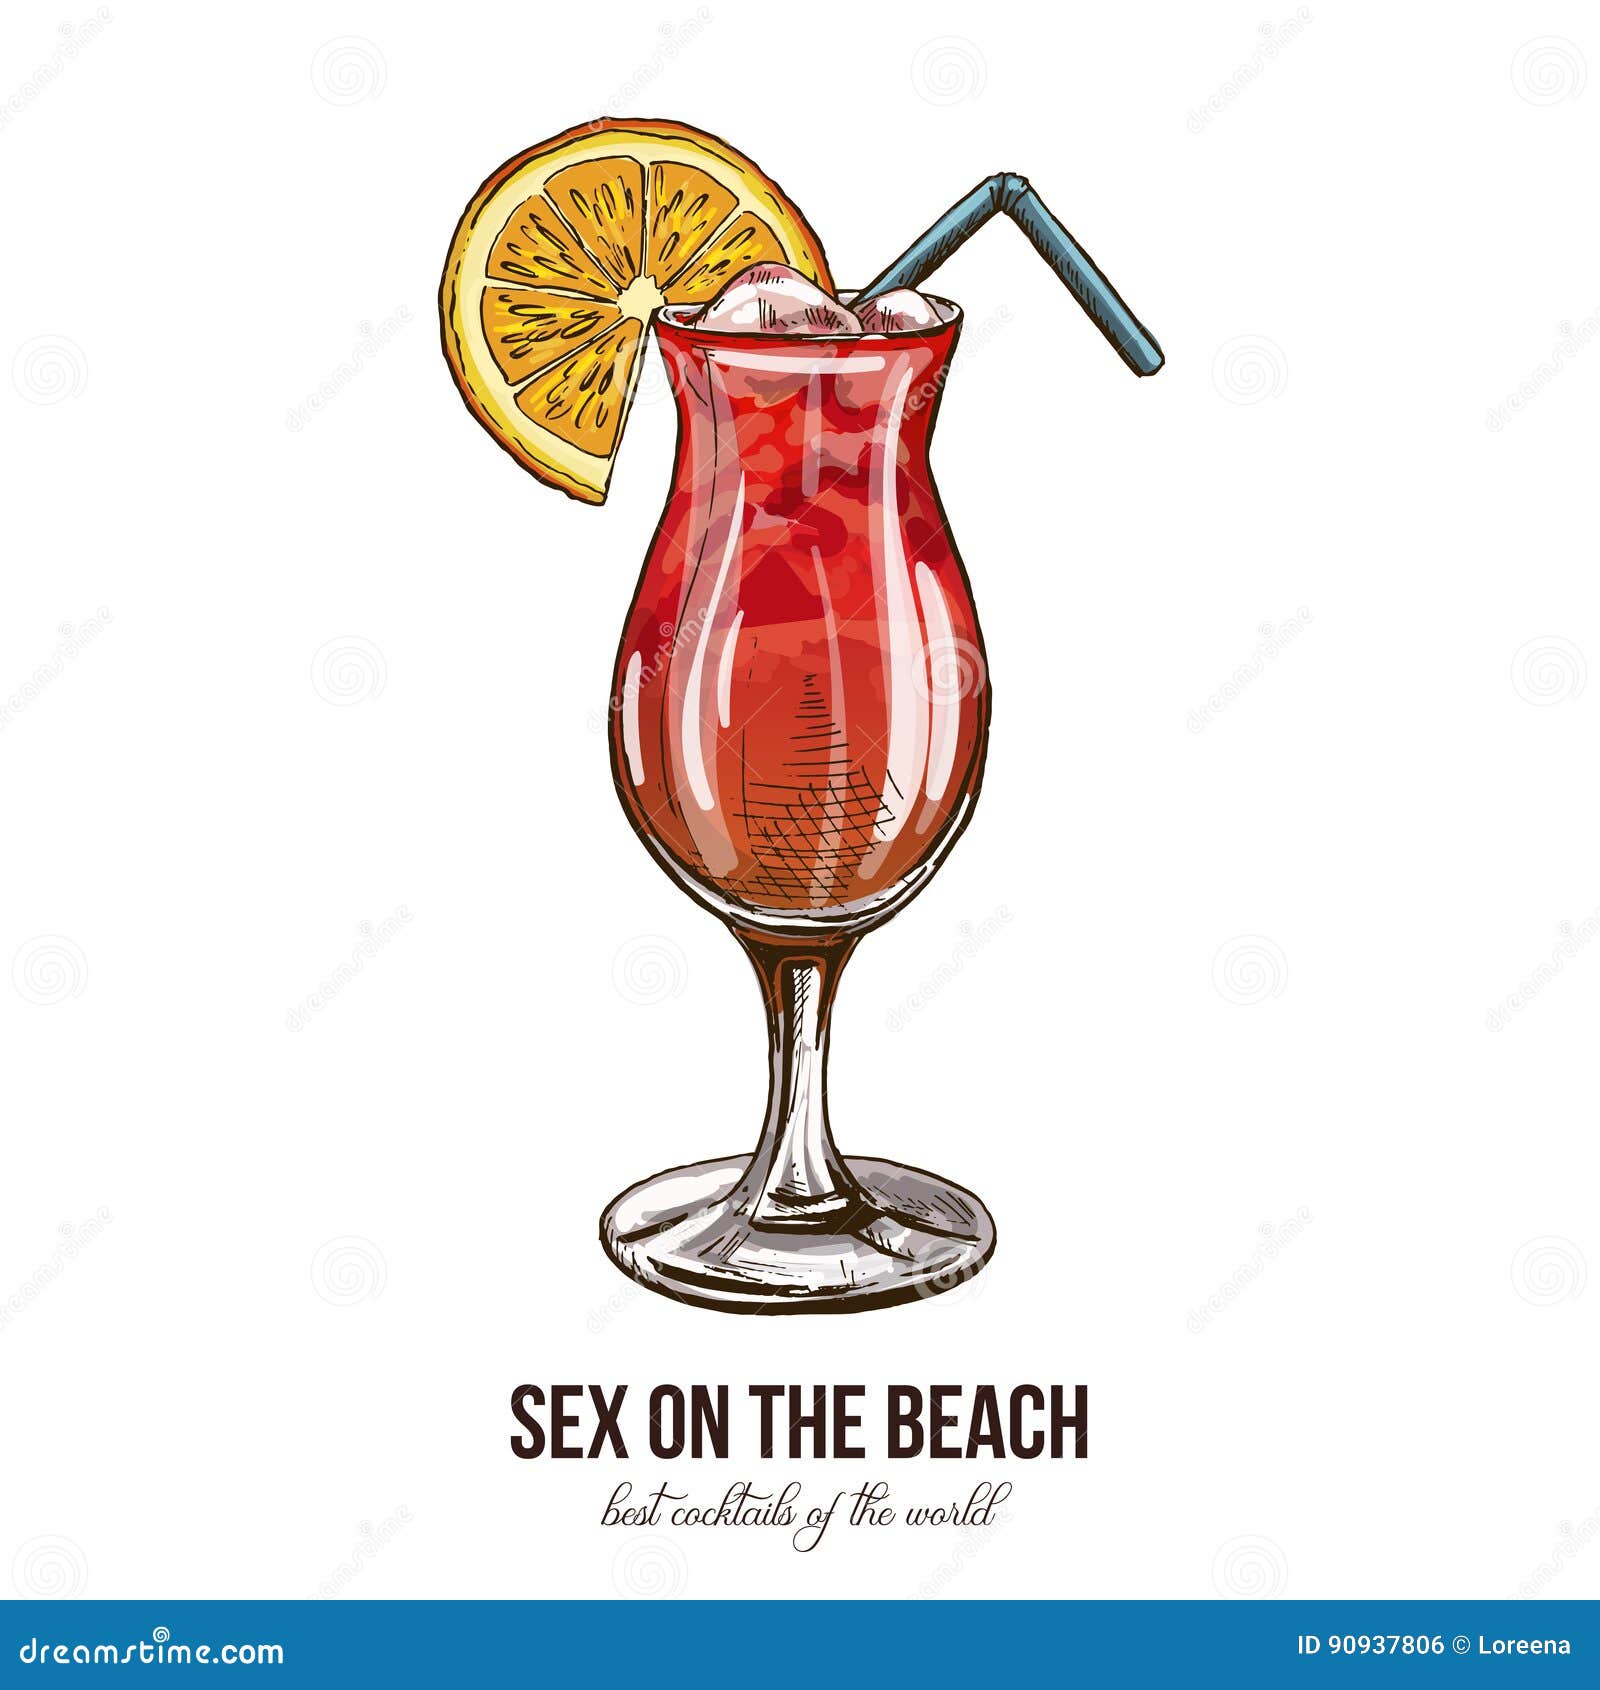 Seks on the beach